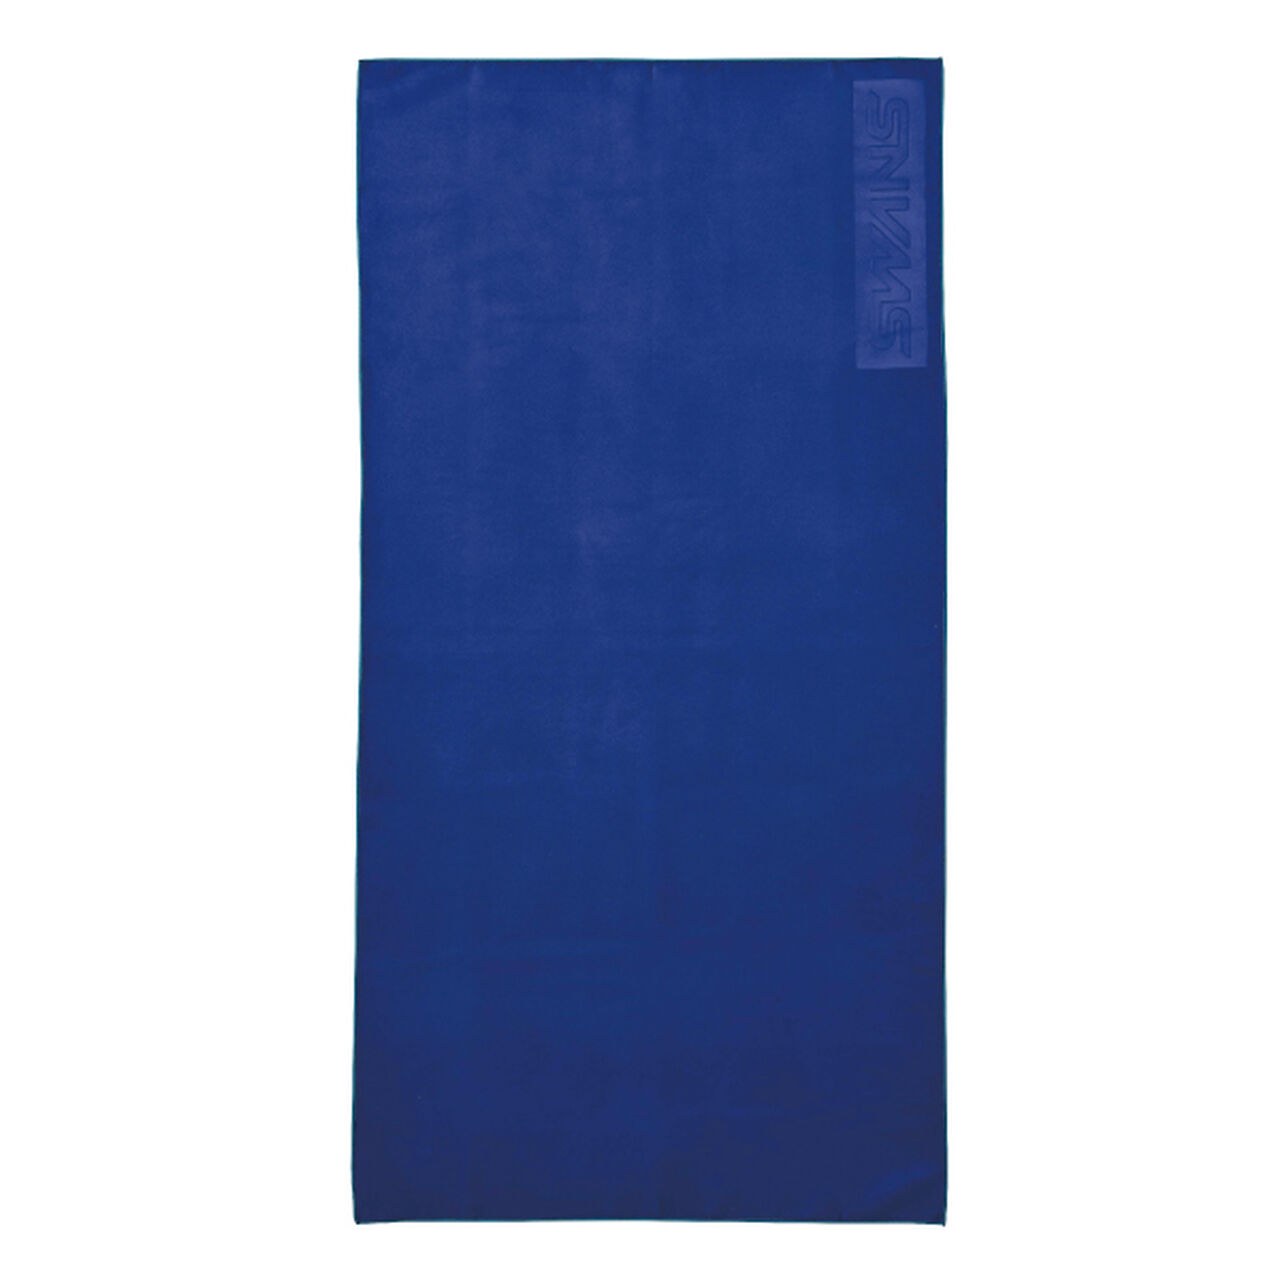 SA-28 Dark blue microfiber towel L size,Opt4, large image number 0